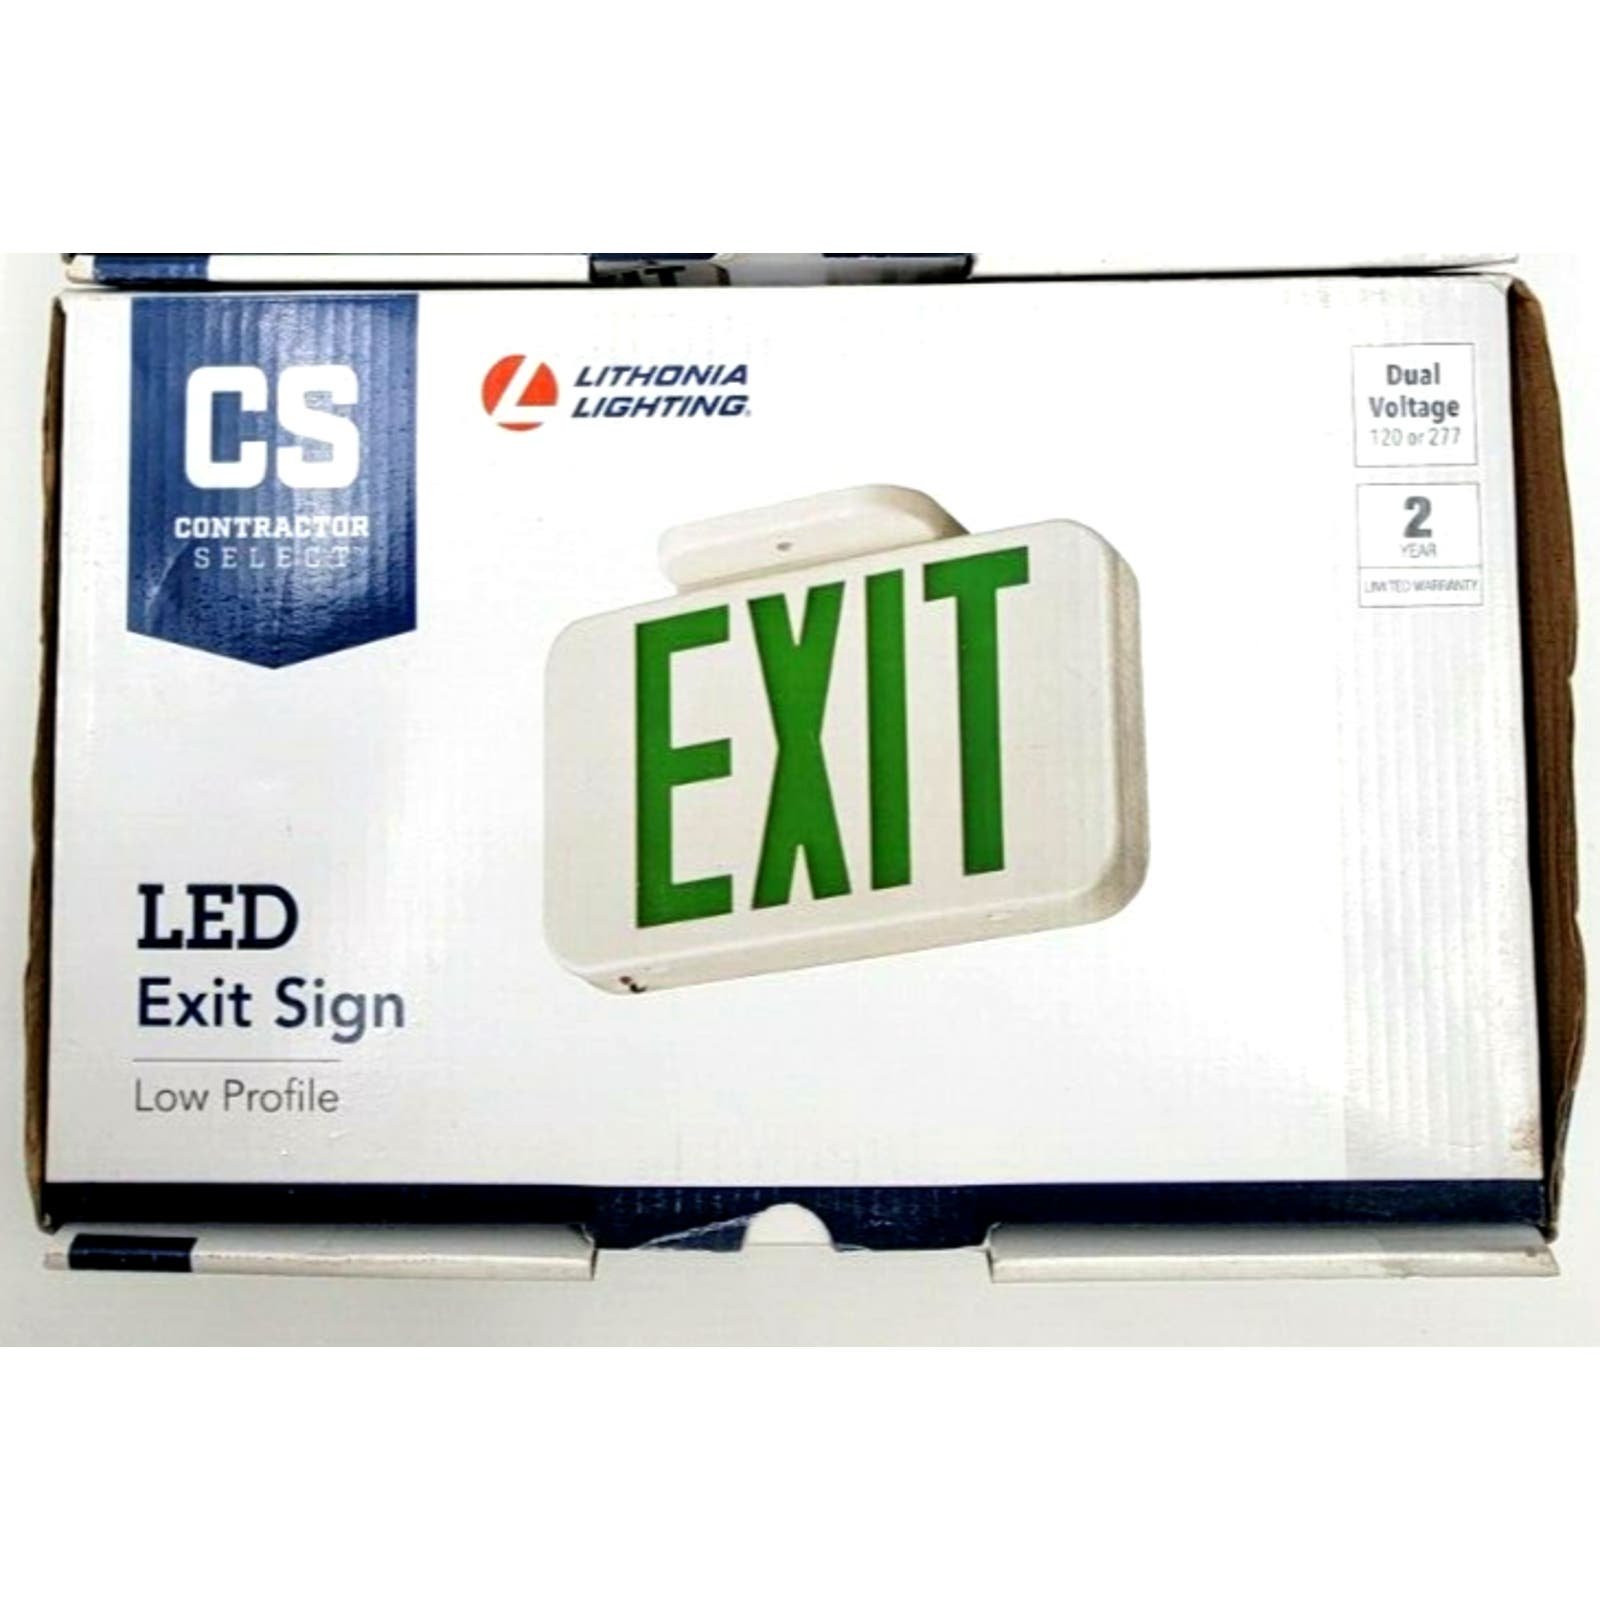 Lithonia Lighting Green LED Emergency Exit Sign 120 Volt Battery Backup HcOzGVZZ1